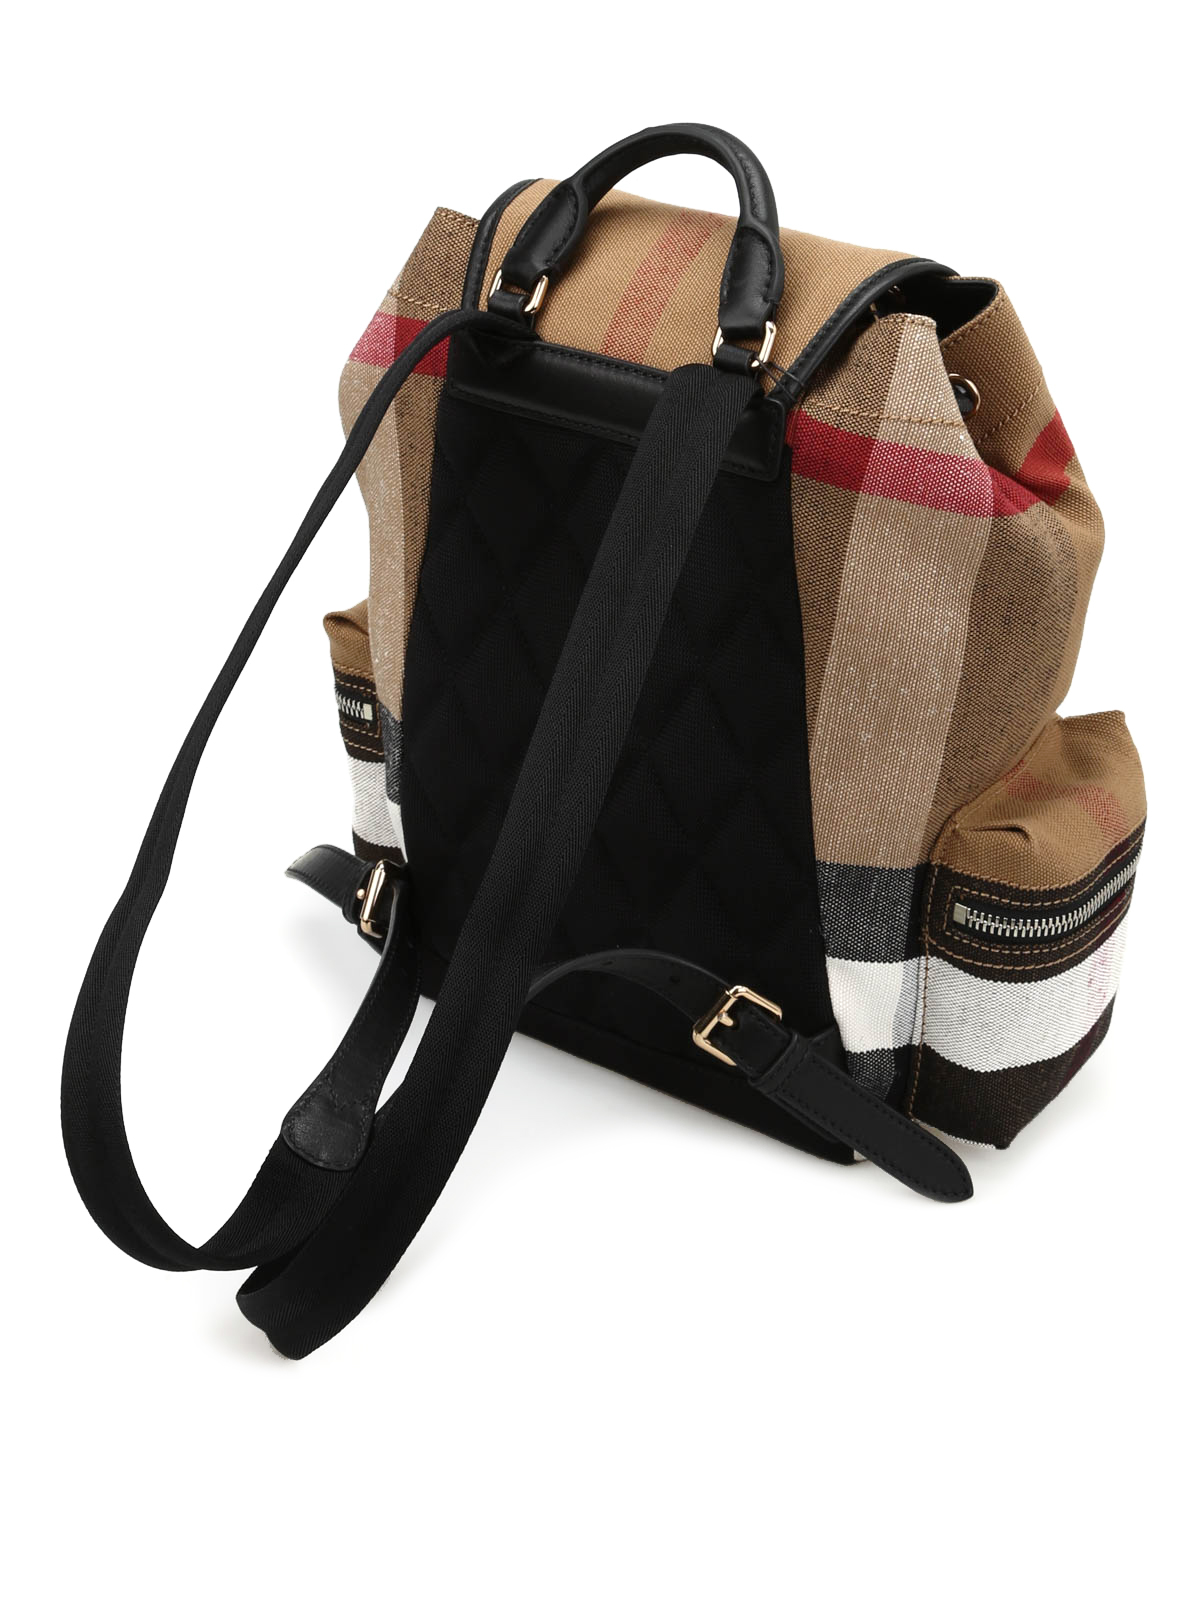 burberry rucksack backpack